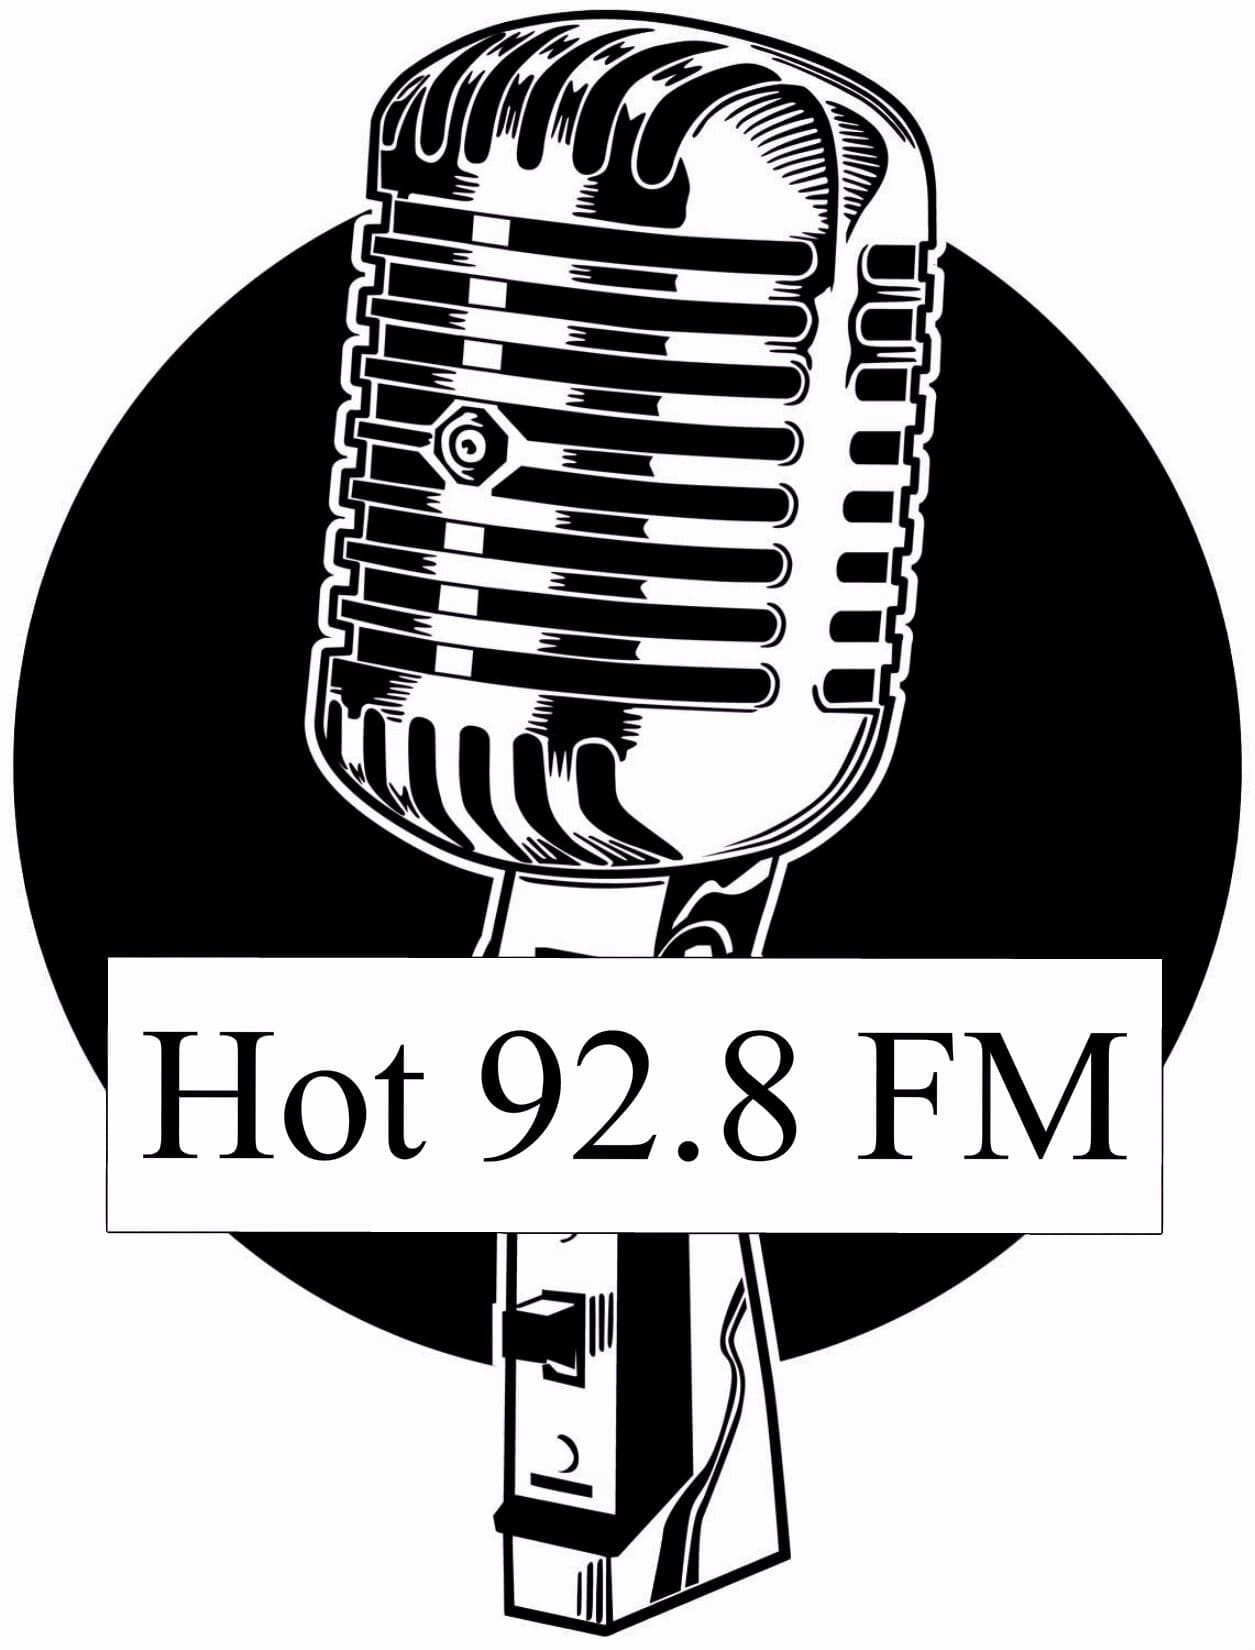 Hot 92.8 FM